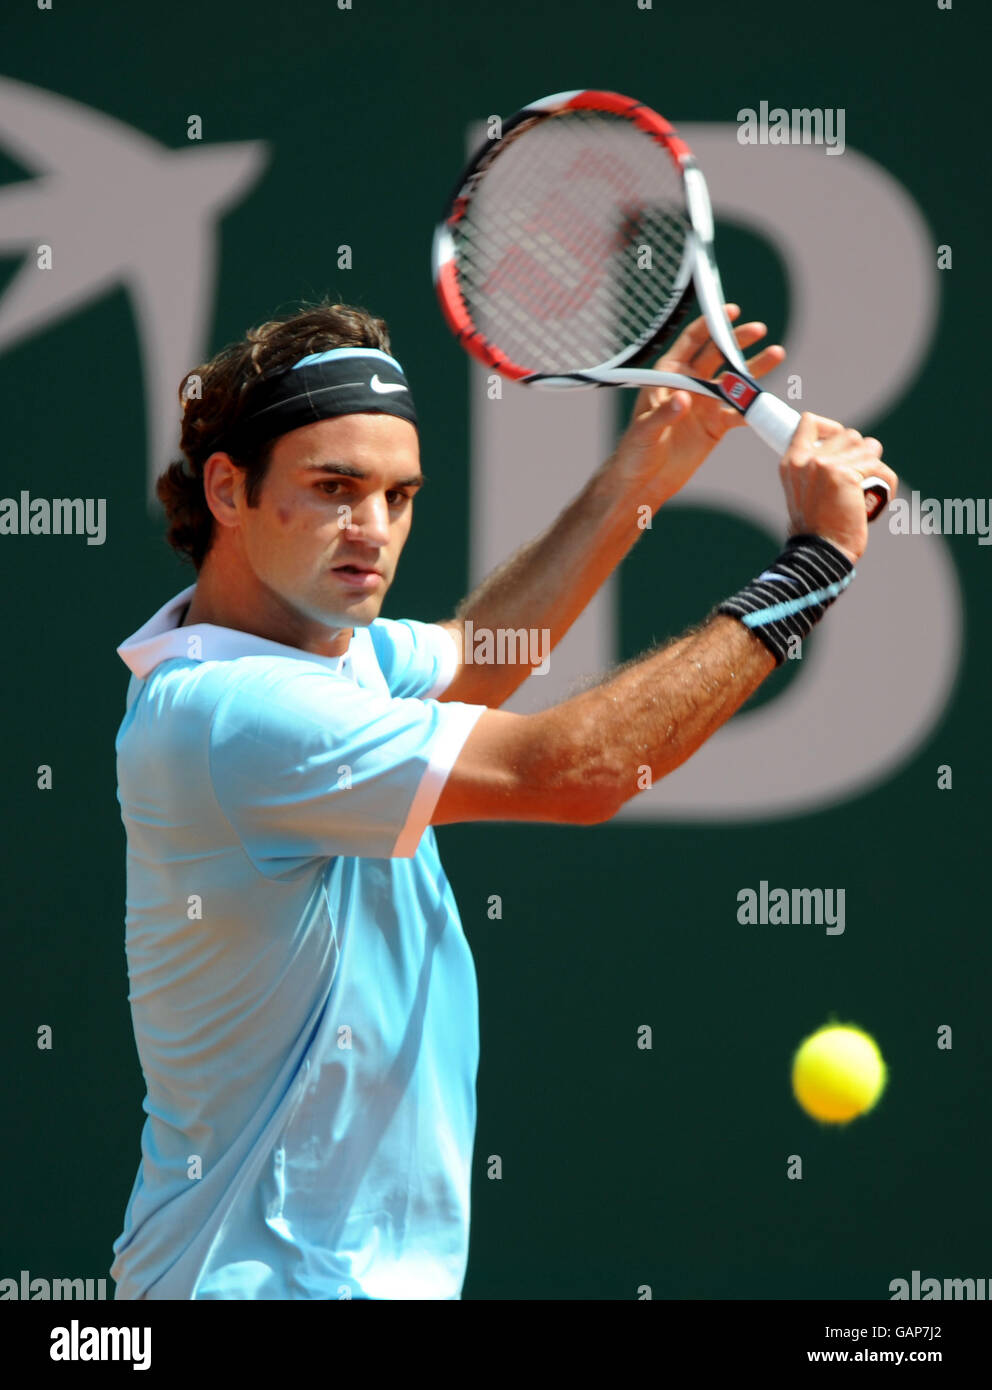 Tennis - ATP Masters Series - Monte Carlo - Roger Federer / David Nalbandian. Roger Federer Stockfoto